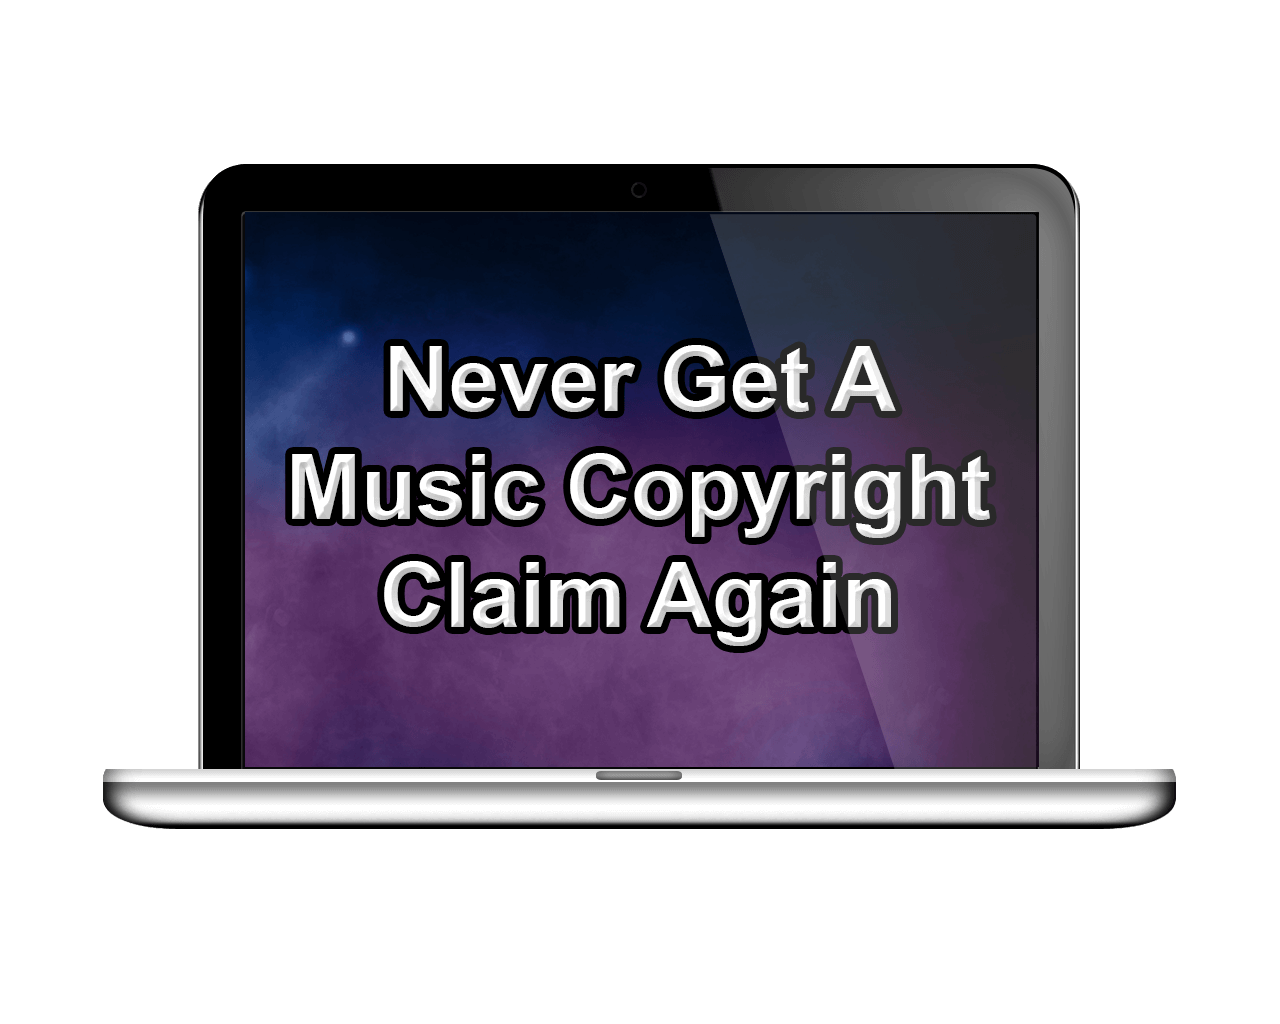 Never Get A Music Copyright Claim Again Image